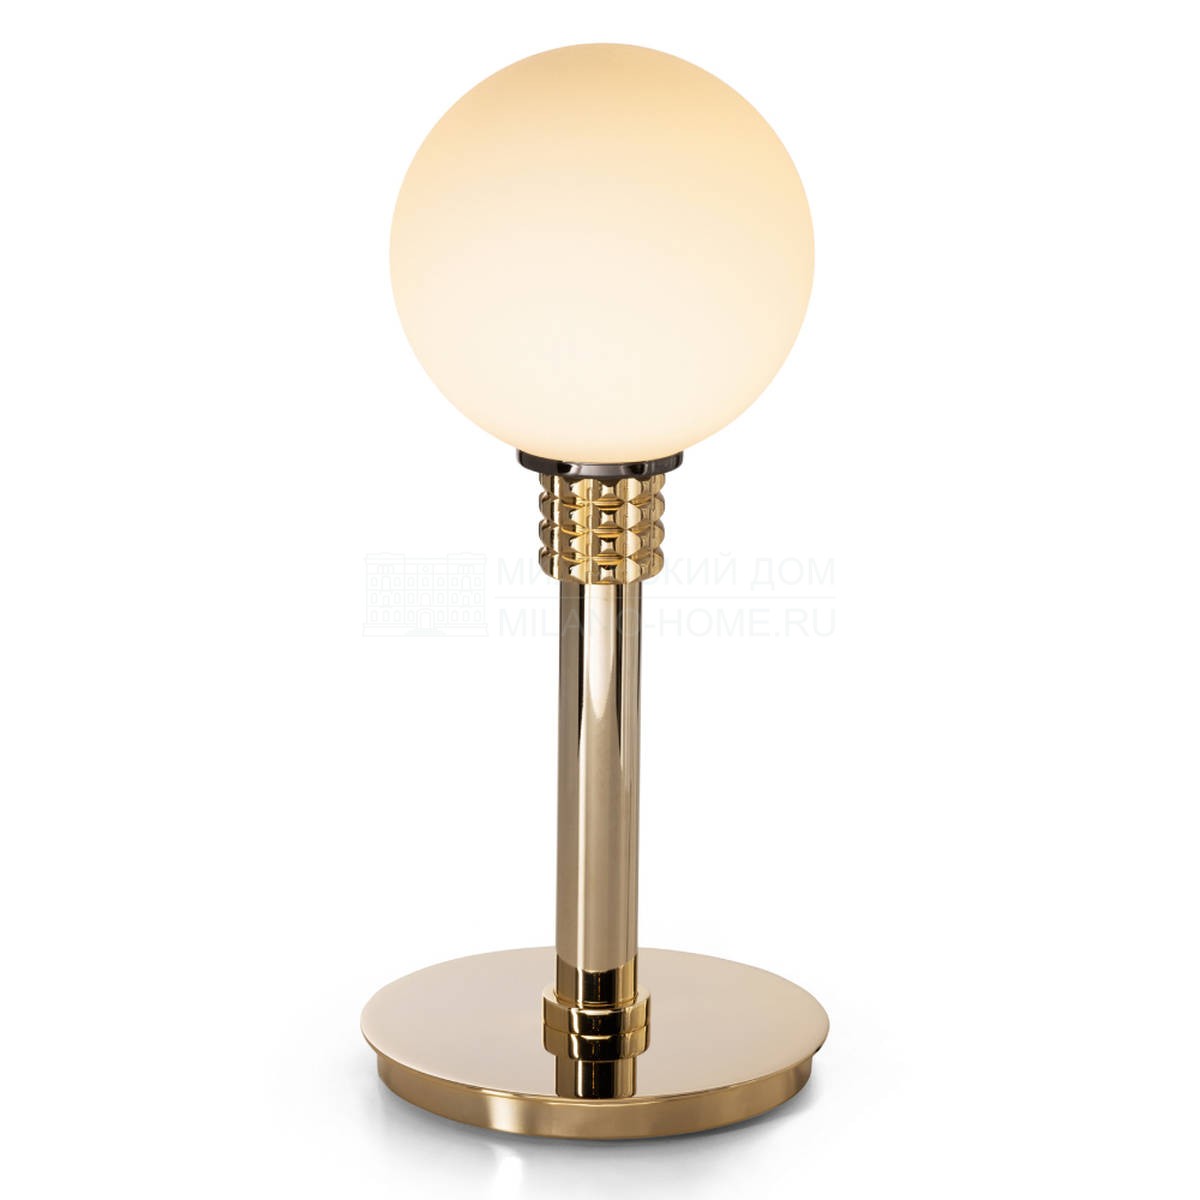 Настольная лампа Alpha table lamp из Италии фабрики IPE CAVALLI VISIONNAIRE